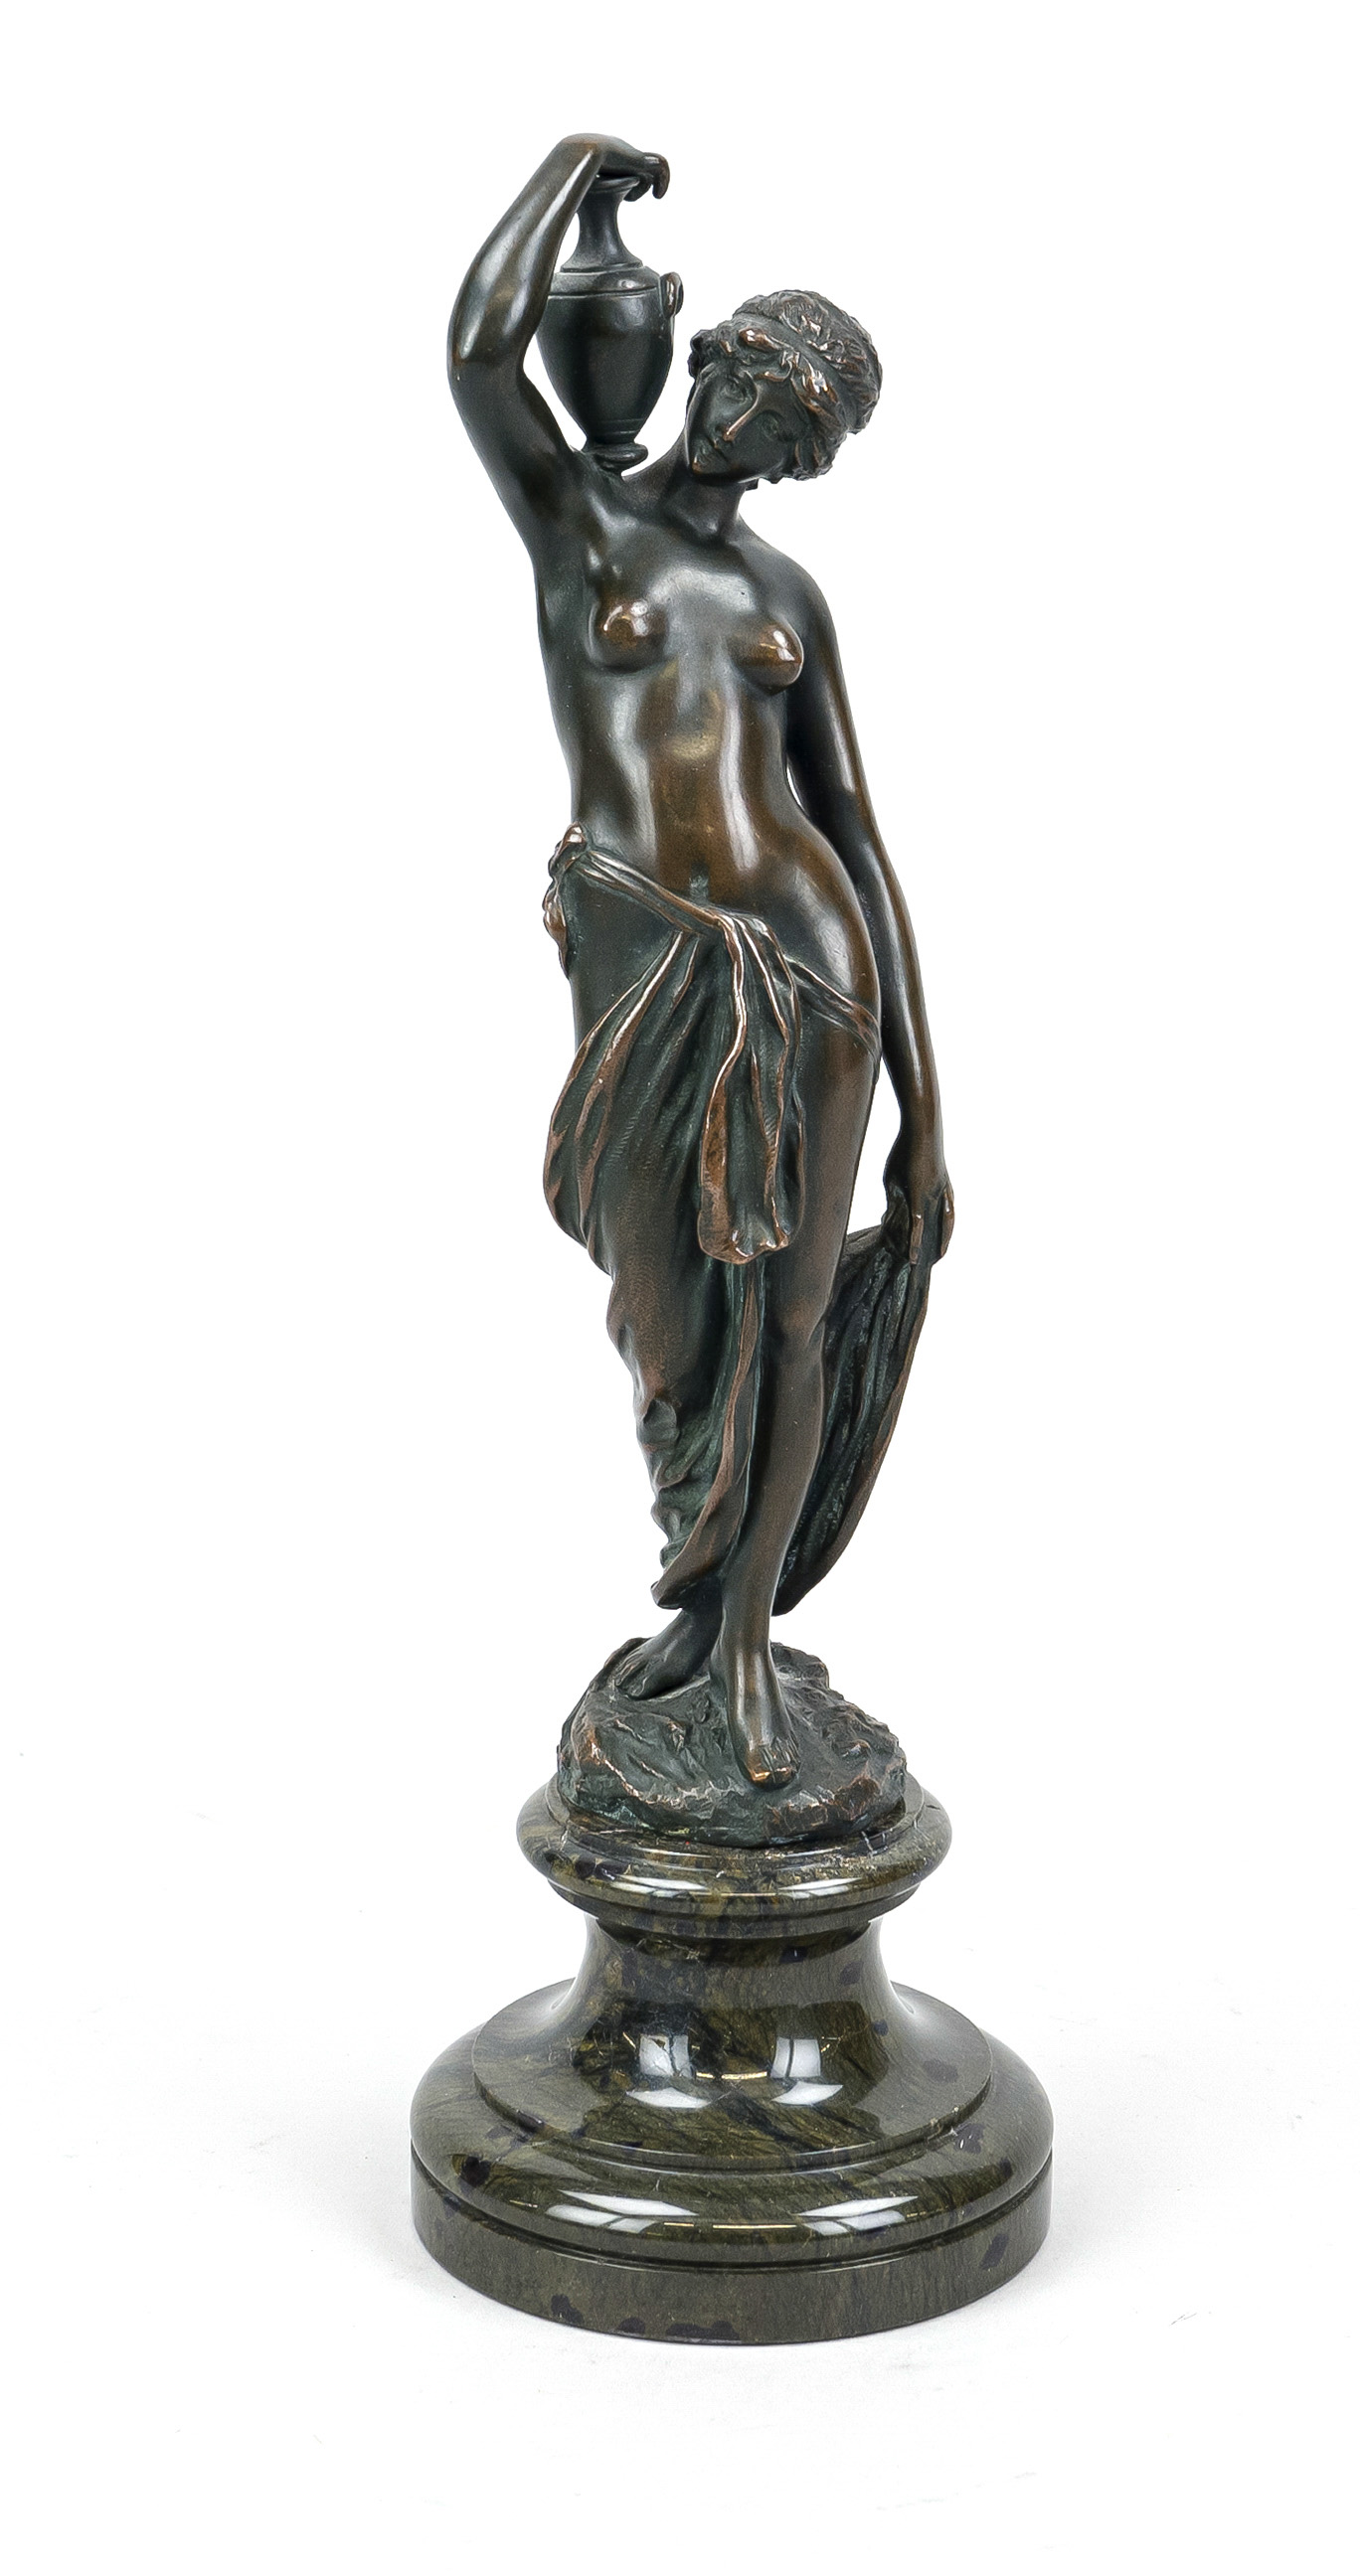 Max Lindenberg (1873-1910), female half nude with jug on her shoulder in antique style, brown